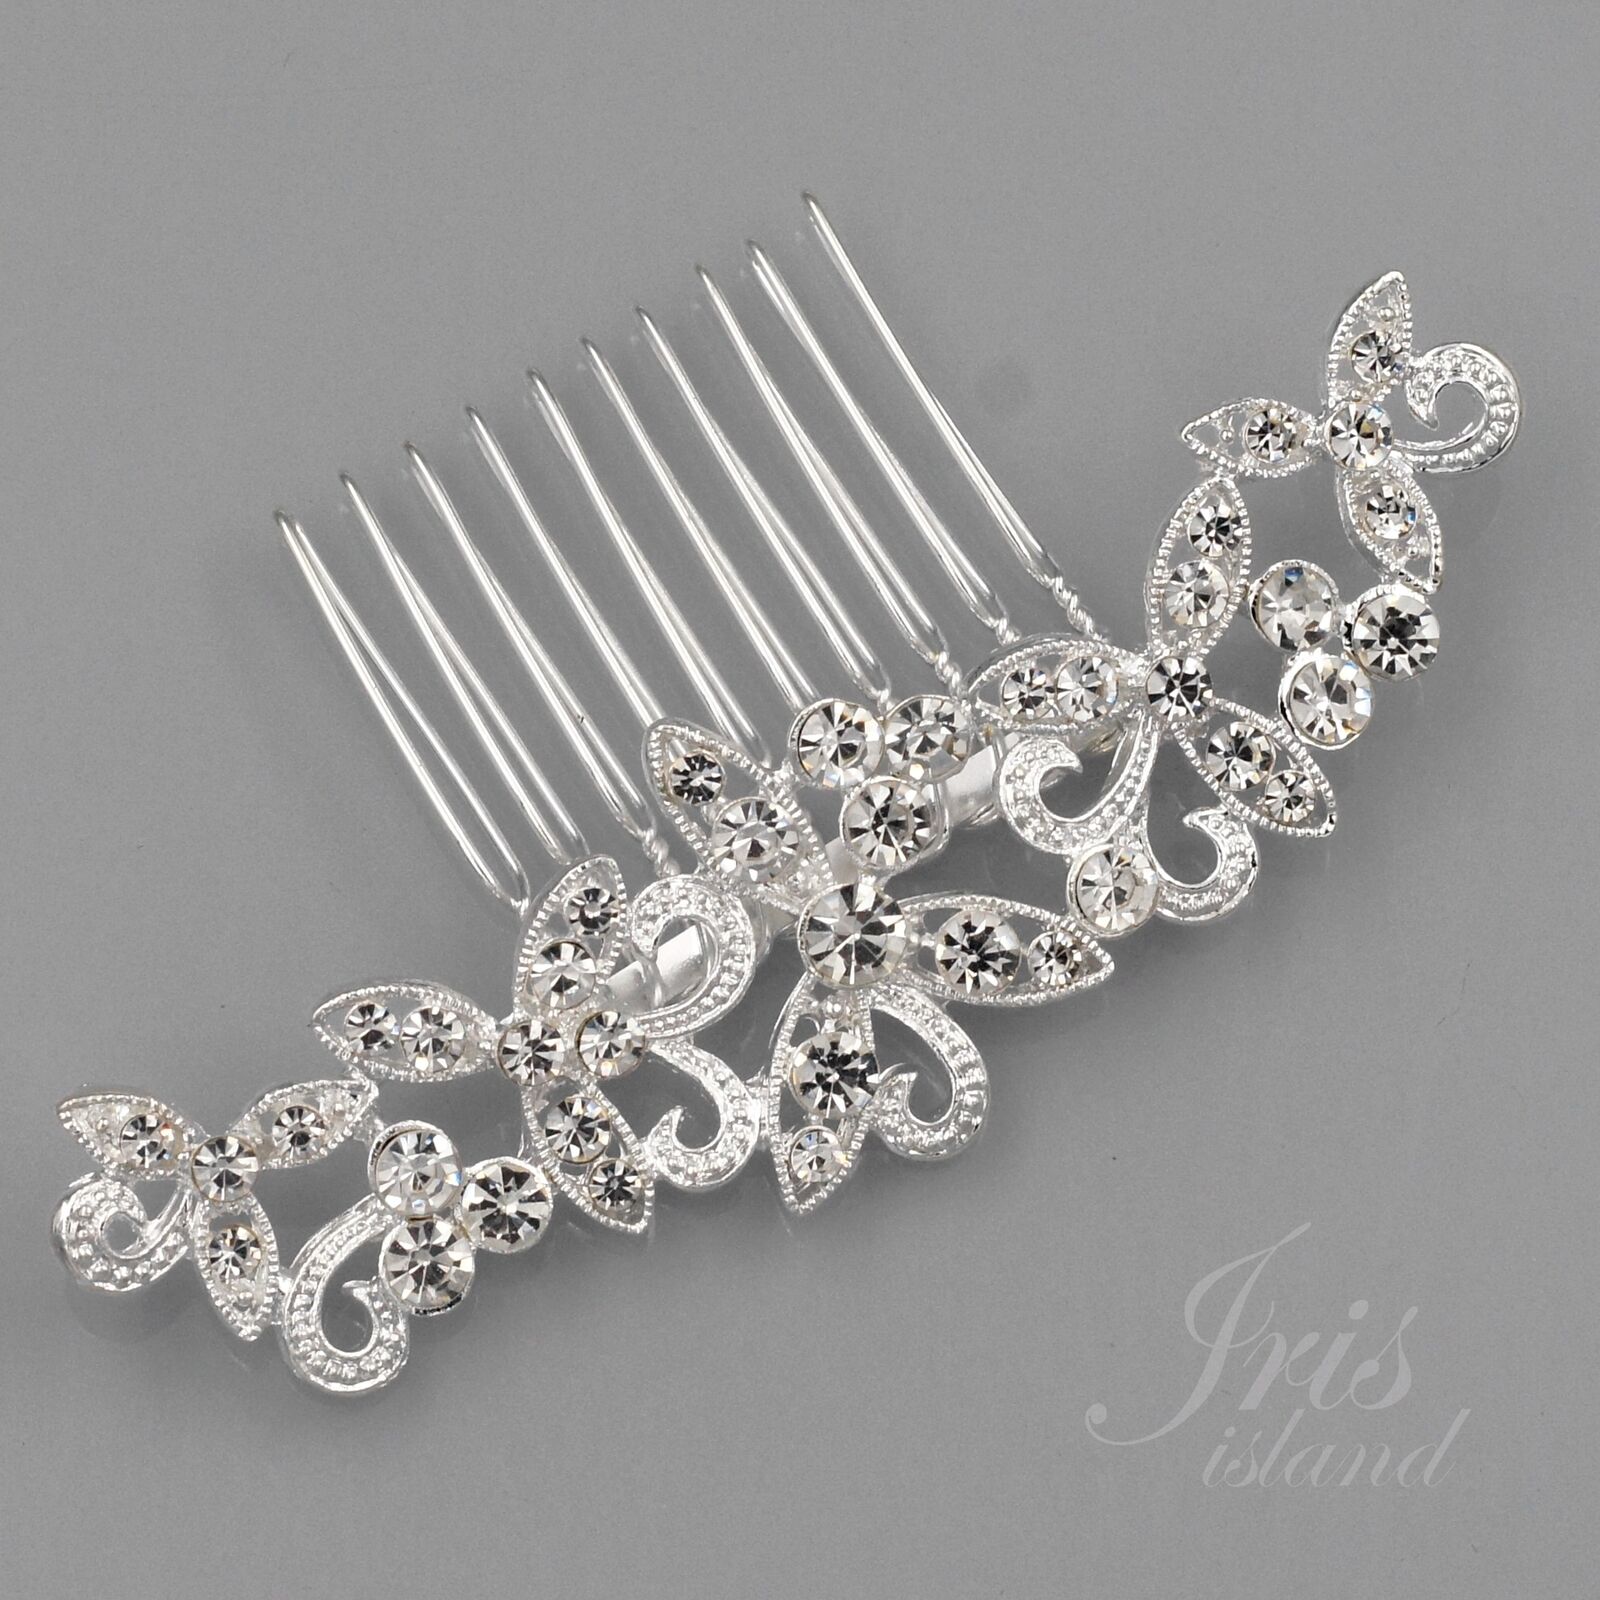 Bridal Hair Comb Clear Crystal Headpiece Wedding Hair Accessories 05320 Silver